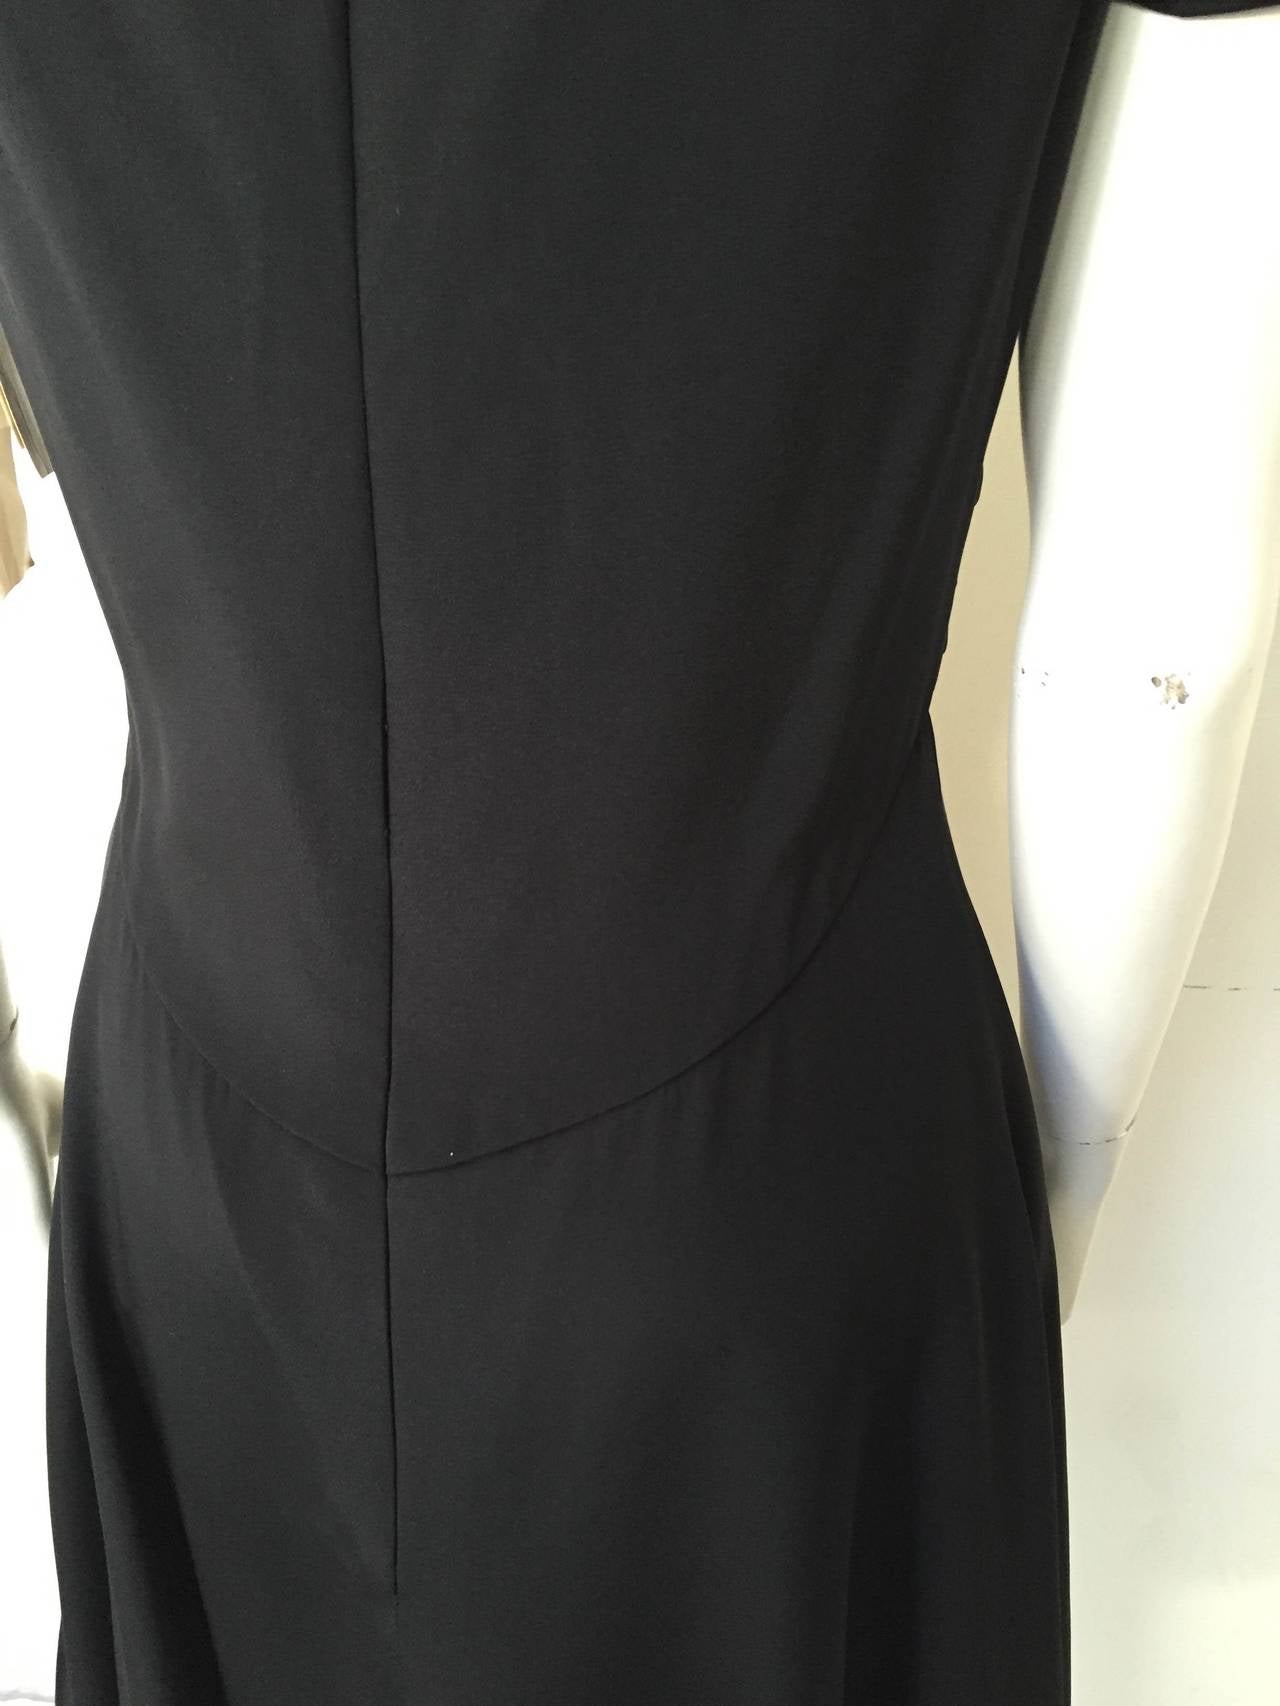 Scaasi 80s black silk dress never worn size 6. 3